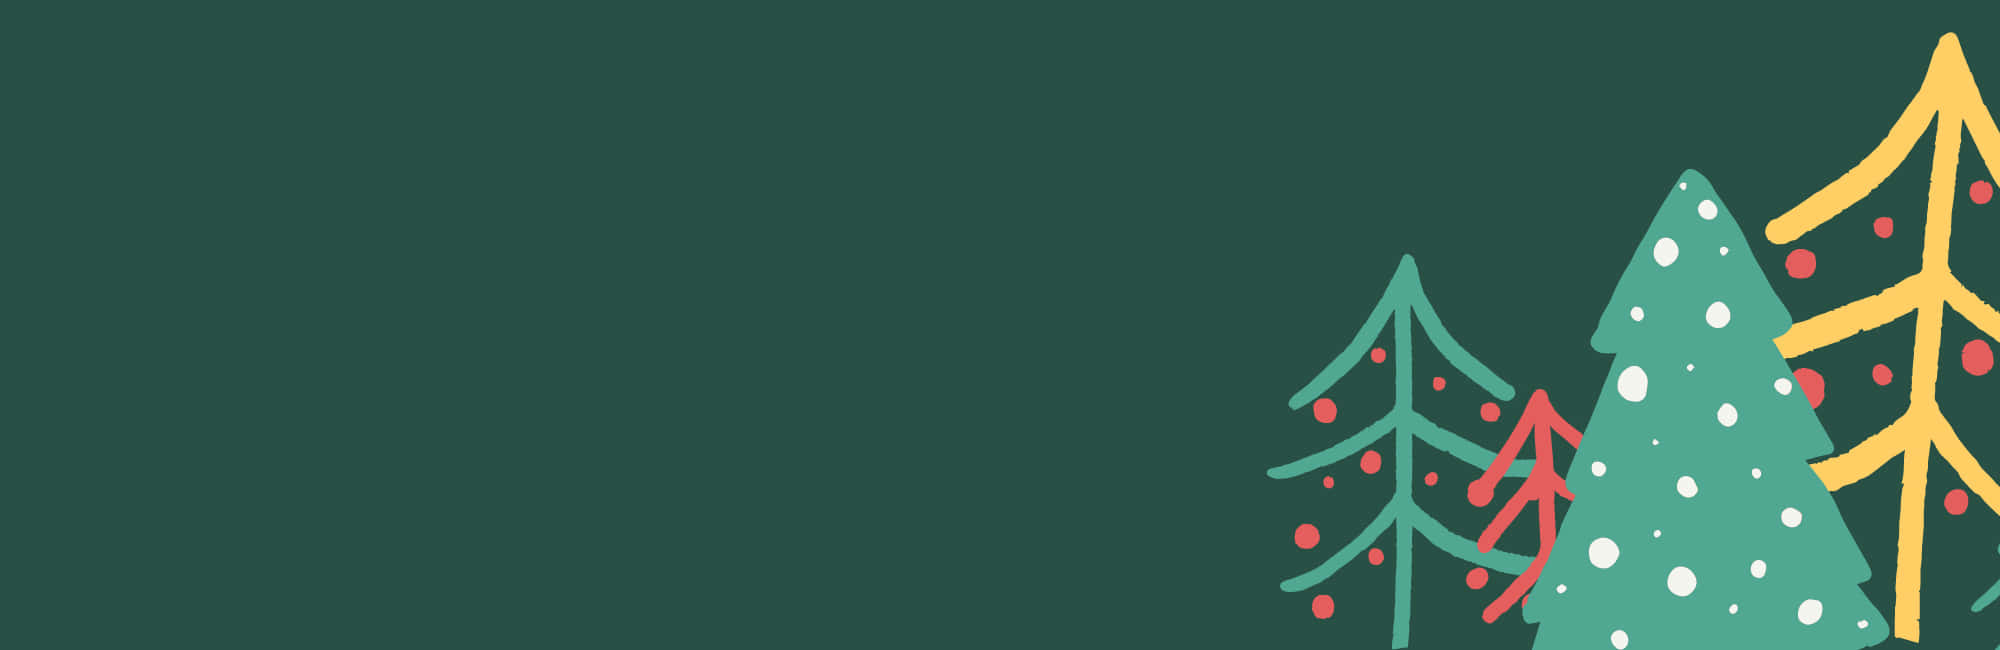 Minimalist Christmas Desktop Group Of Trees Wallpaper